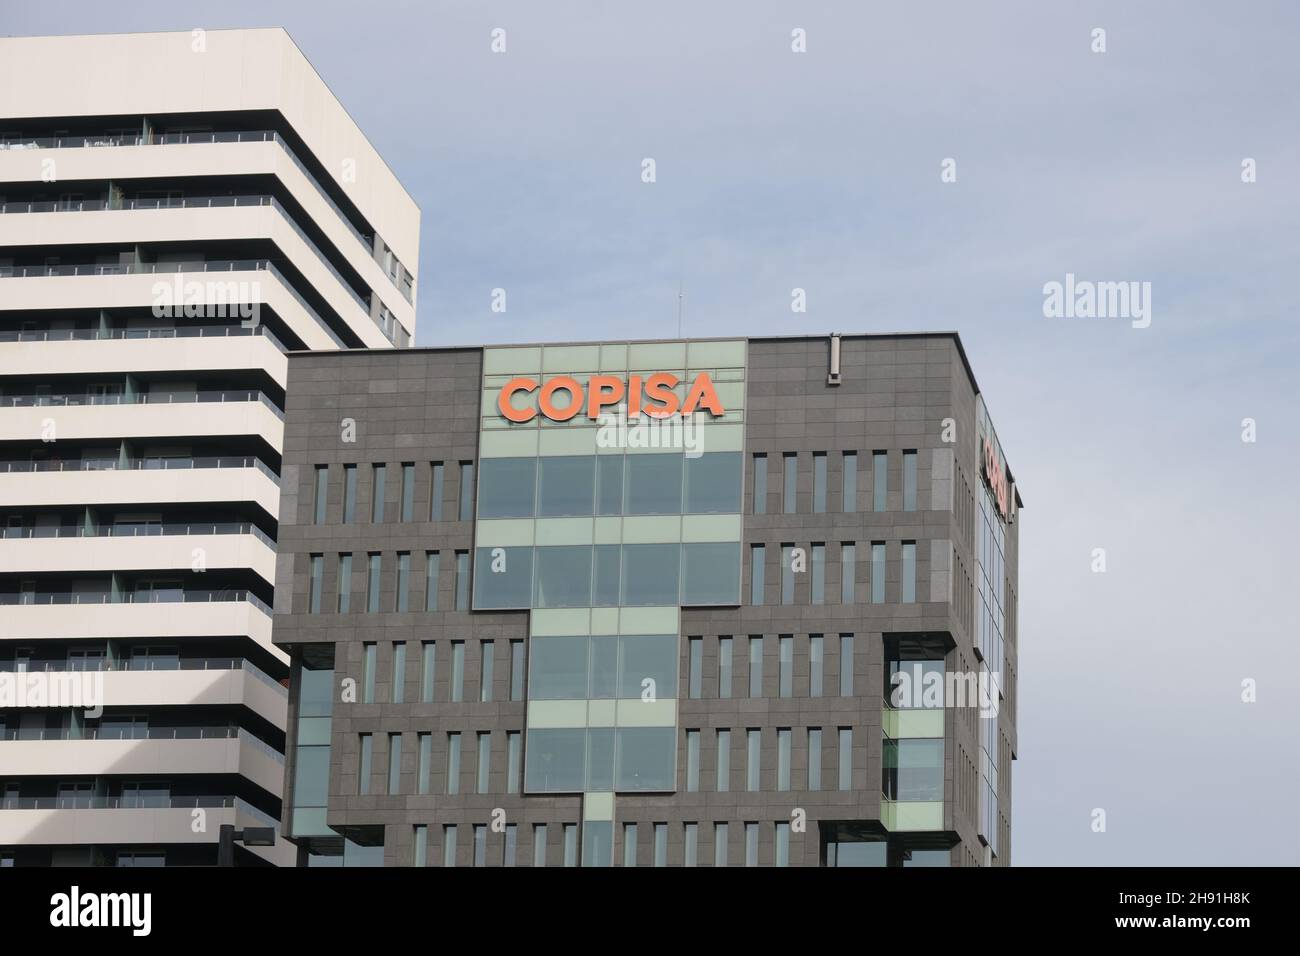 Barcelona, Spain - 5 November 2021: COPISA company sign, Illustrative Editorial. Stock Photo